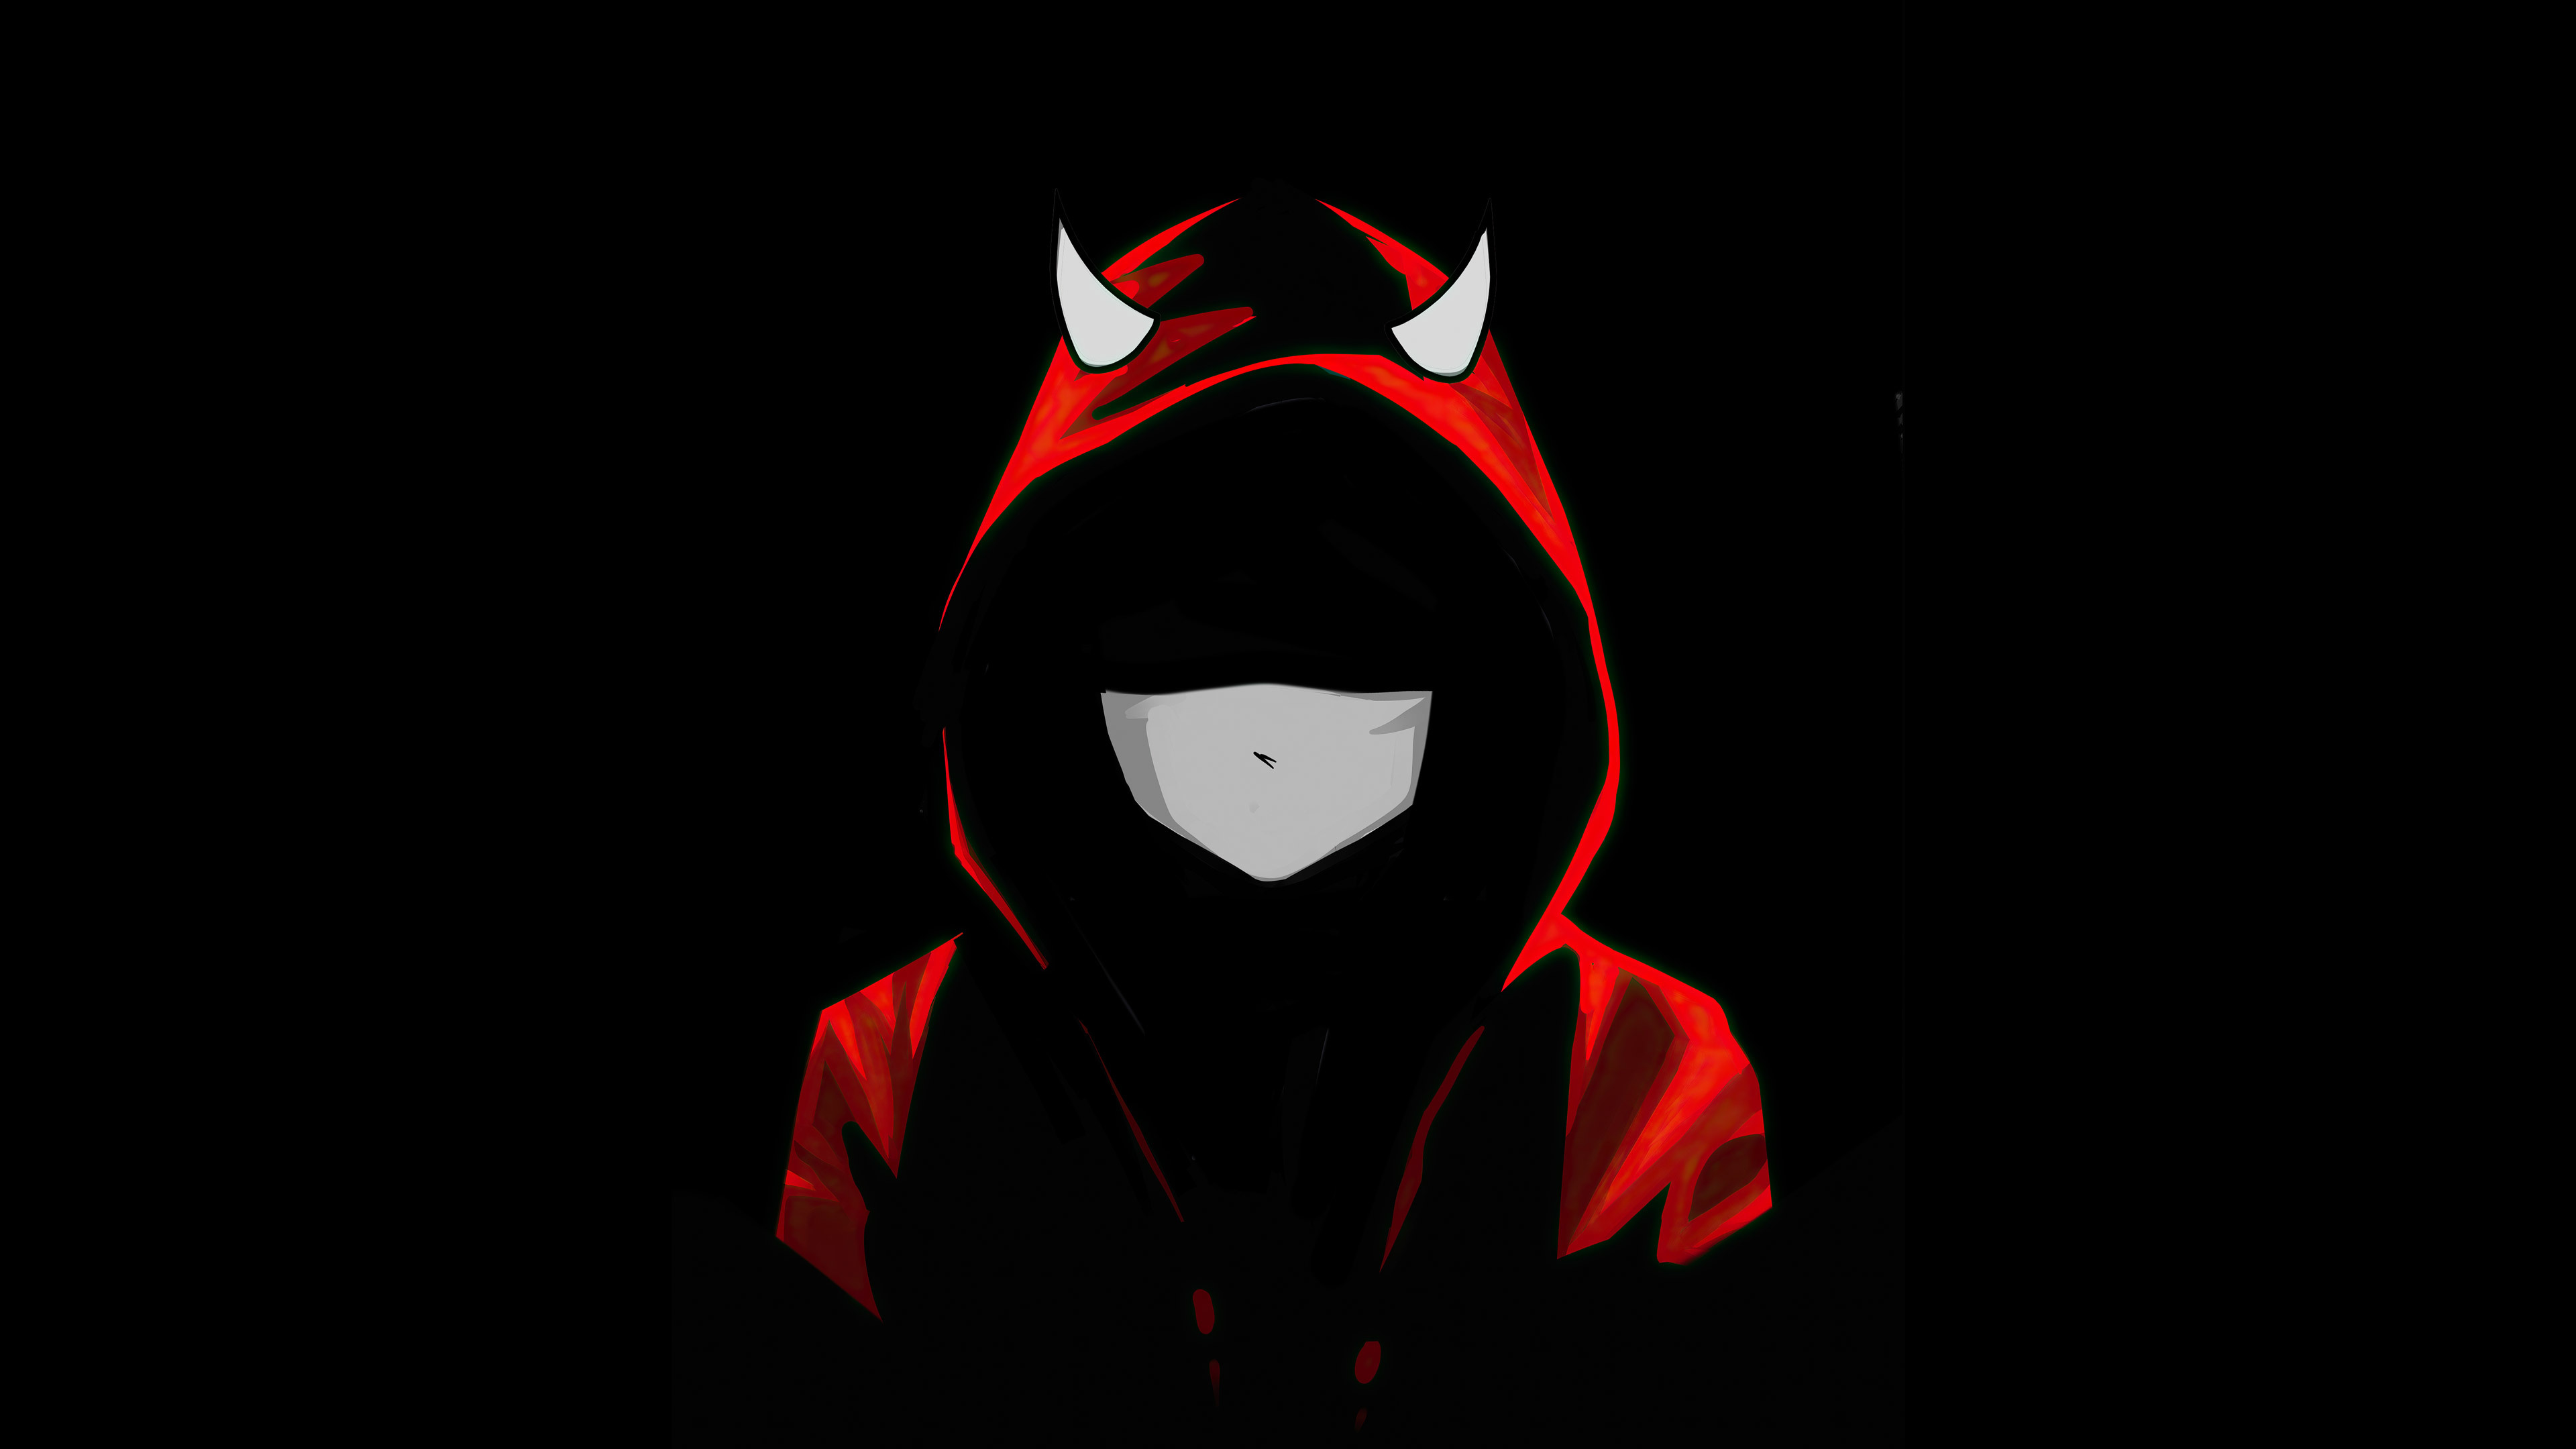 Download wallpaper 3840x2160 devil boy in mask, red hoodie, dark 4k  wallpaper, uhd wallpaper, 16:9 widescreen 3840x2160 hd background, 25947